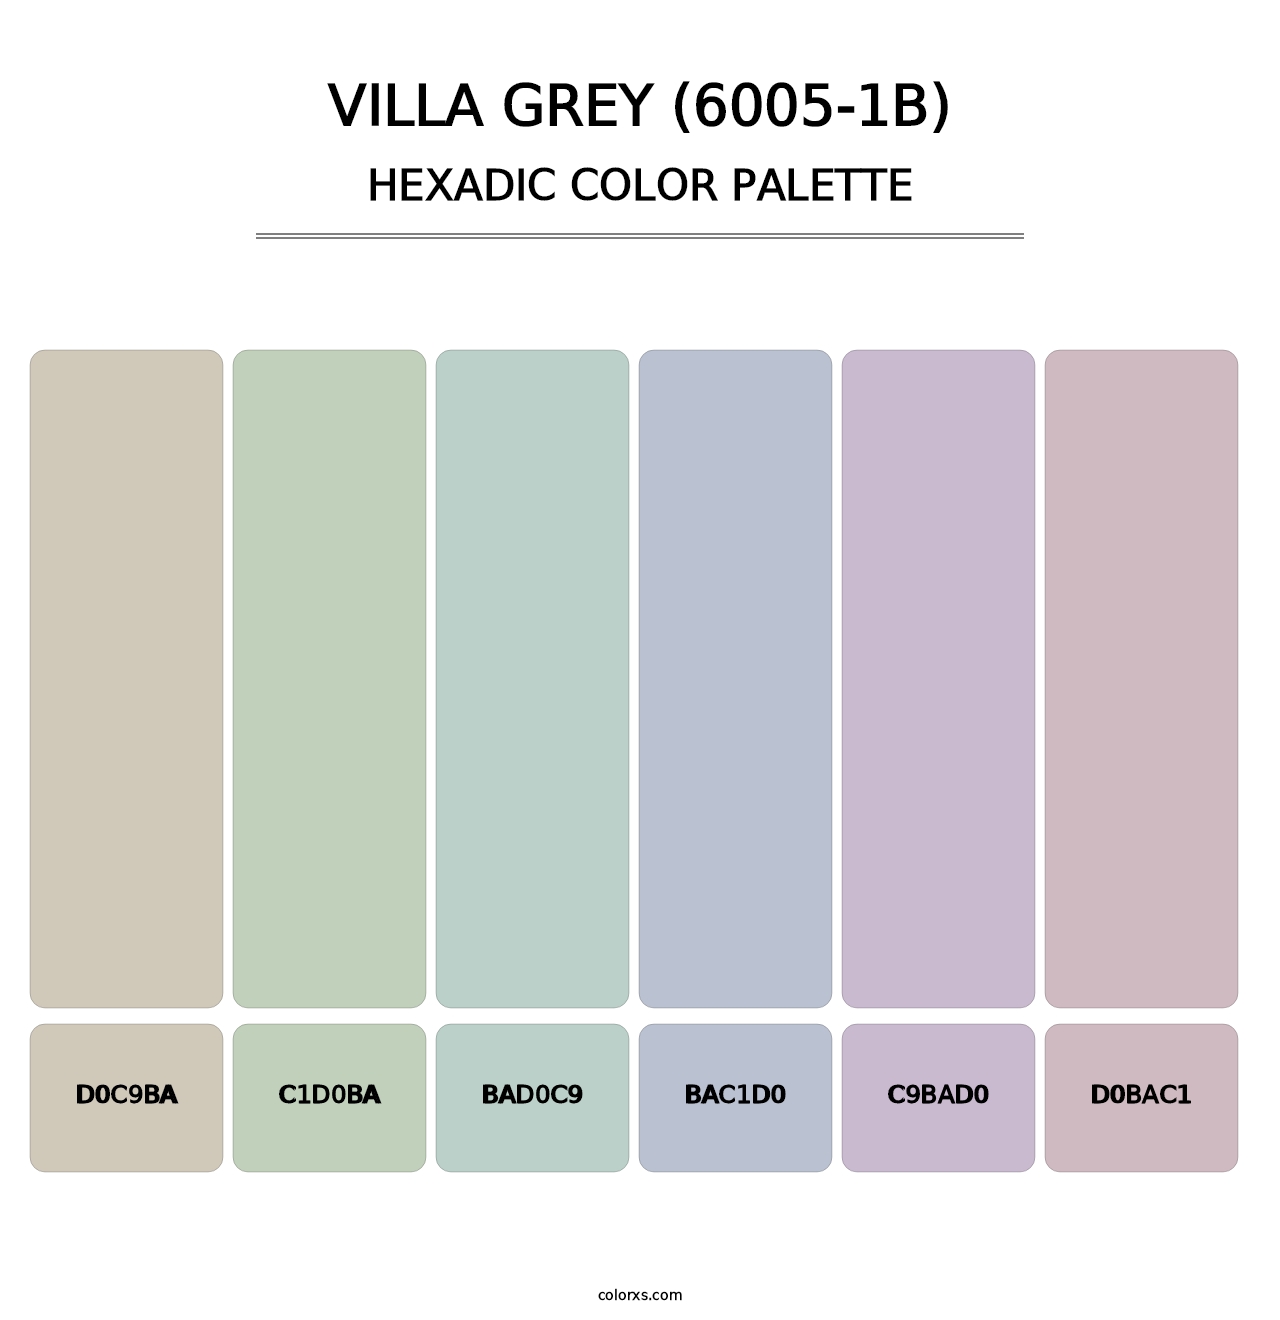 Villa Grey (6005-1B) - Hexadic Color Palette